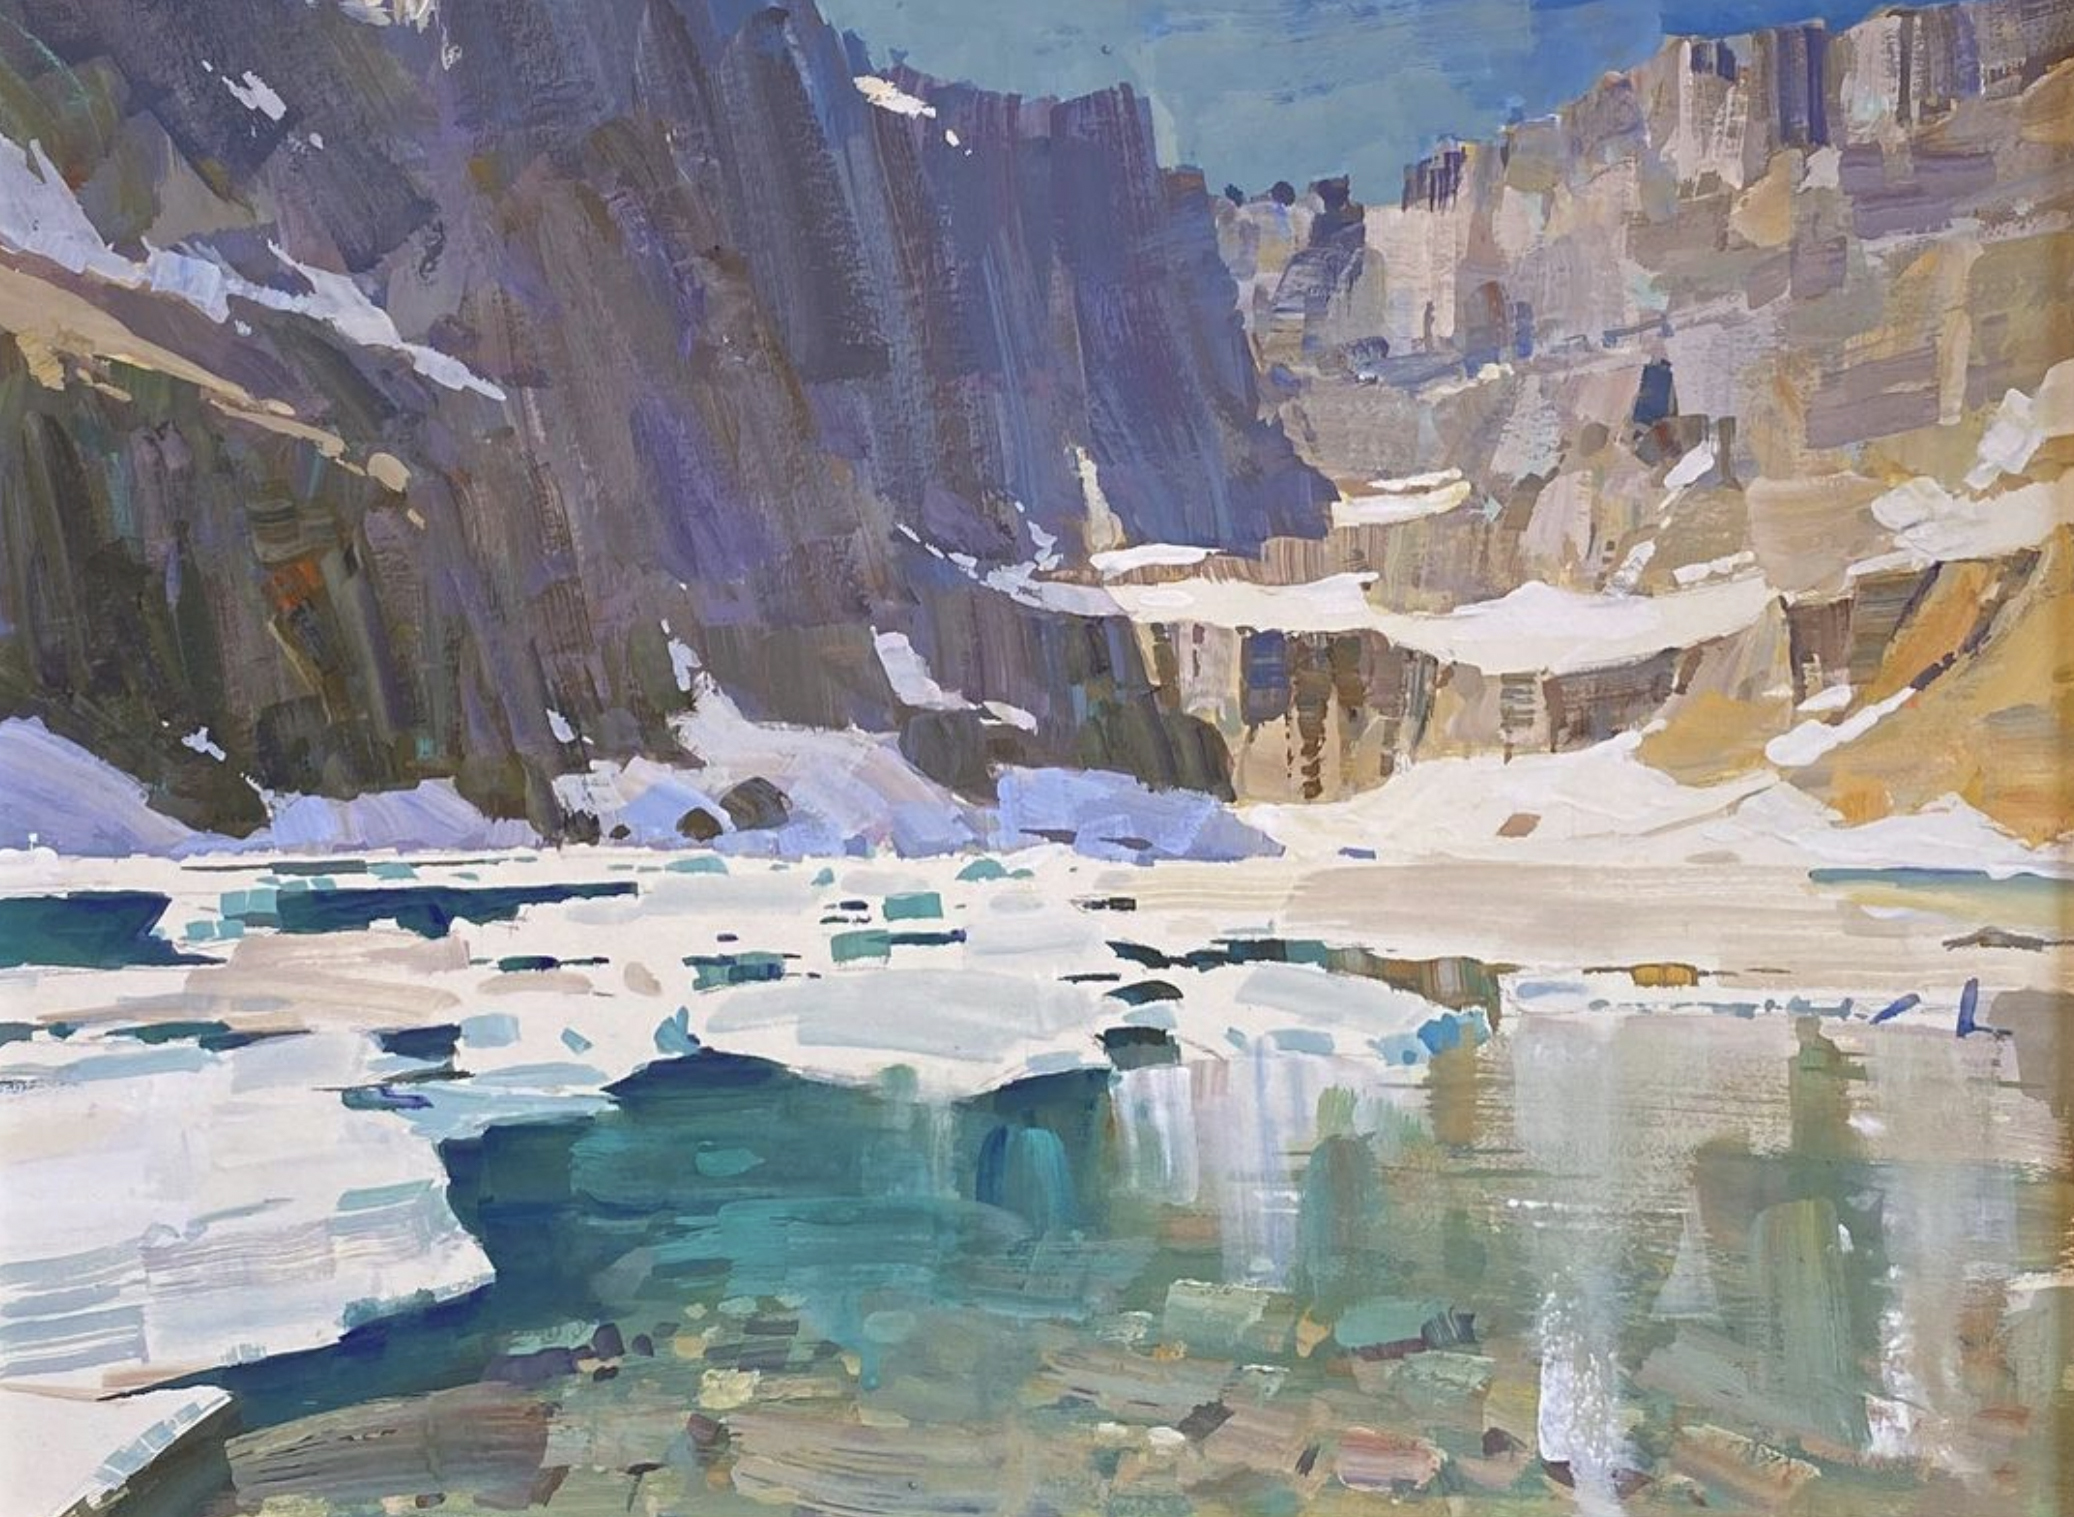 7. “Iceberg Lake” (16x20 in., gouache on illustration board)